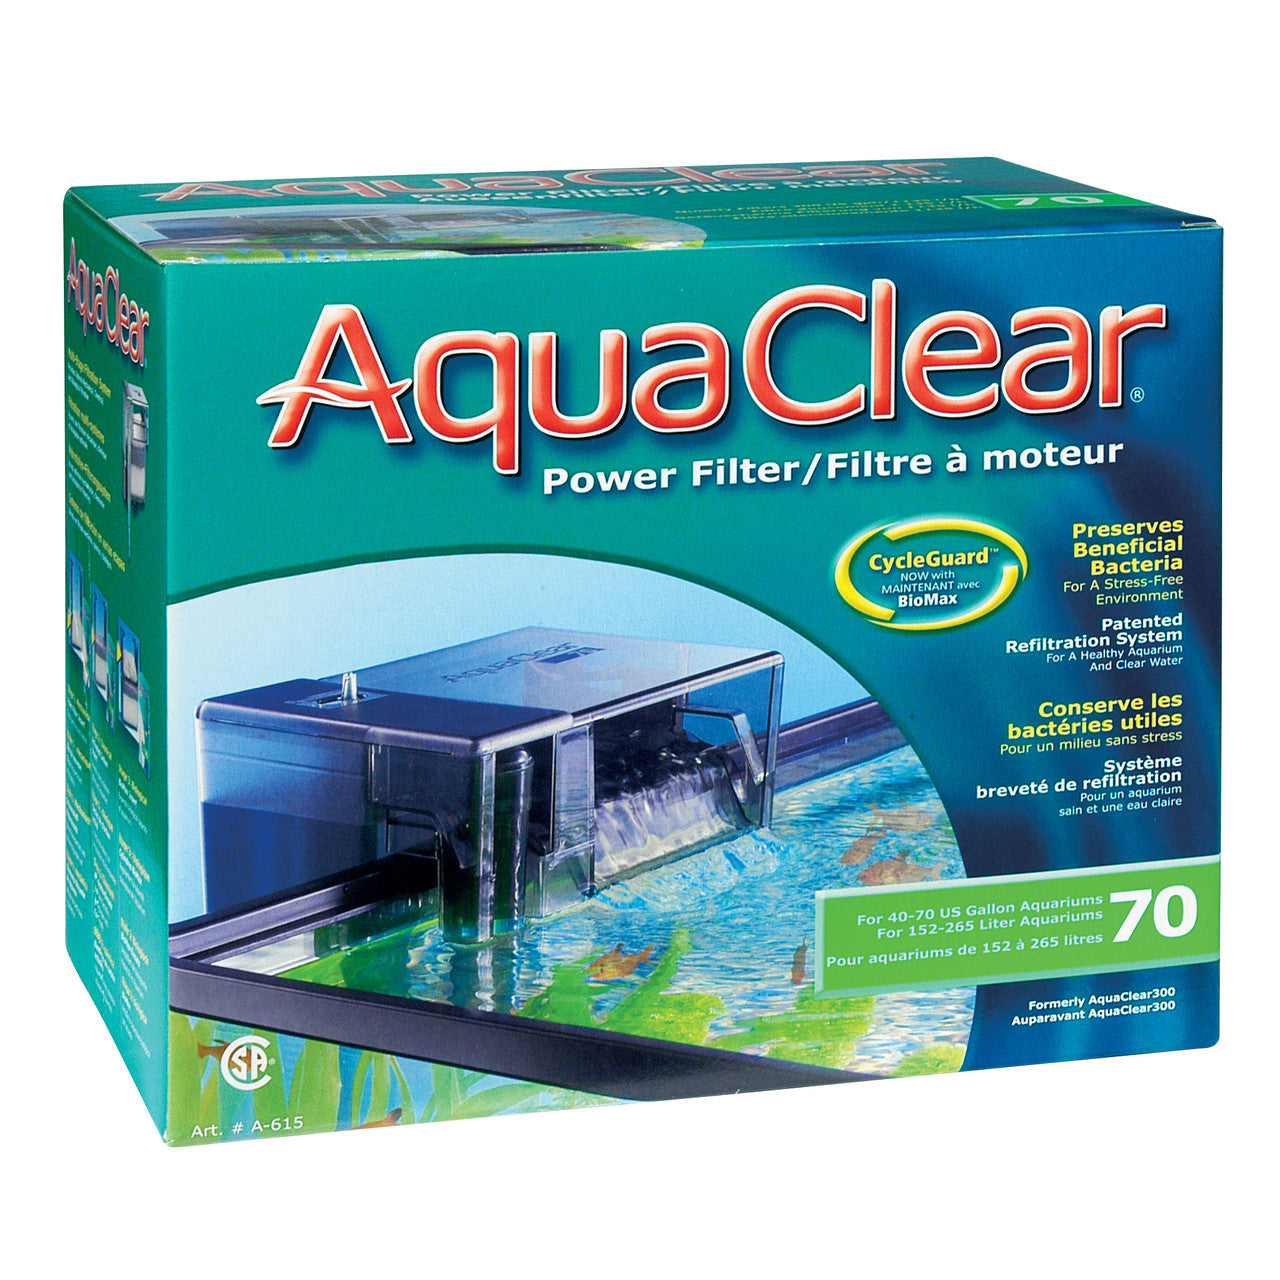 AquaClear 70 Power Filter, cETLus Listed (Inc. A617, A618 & A1373) 015561106153